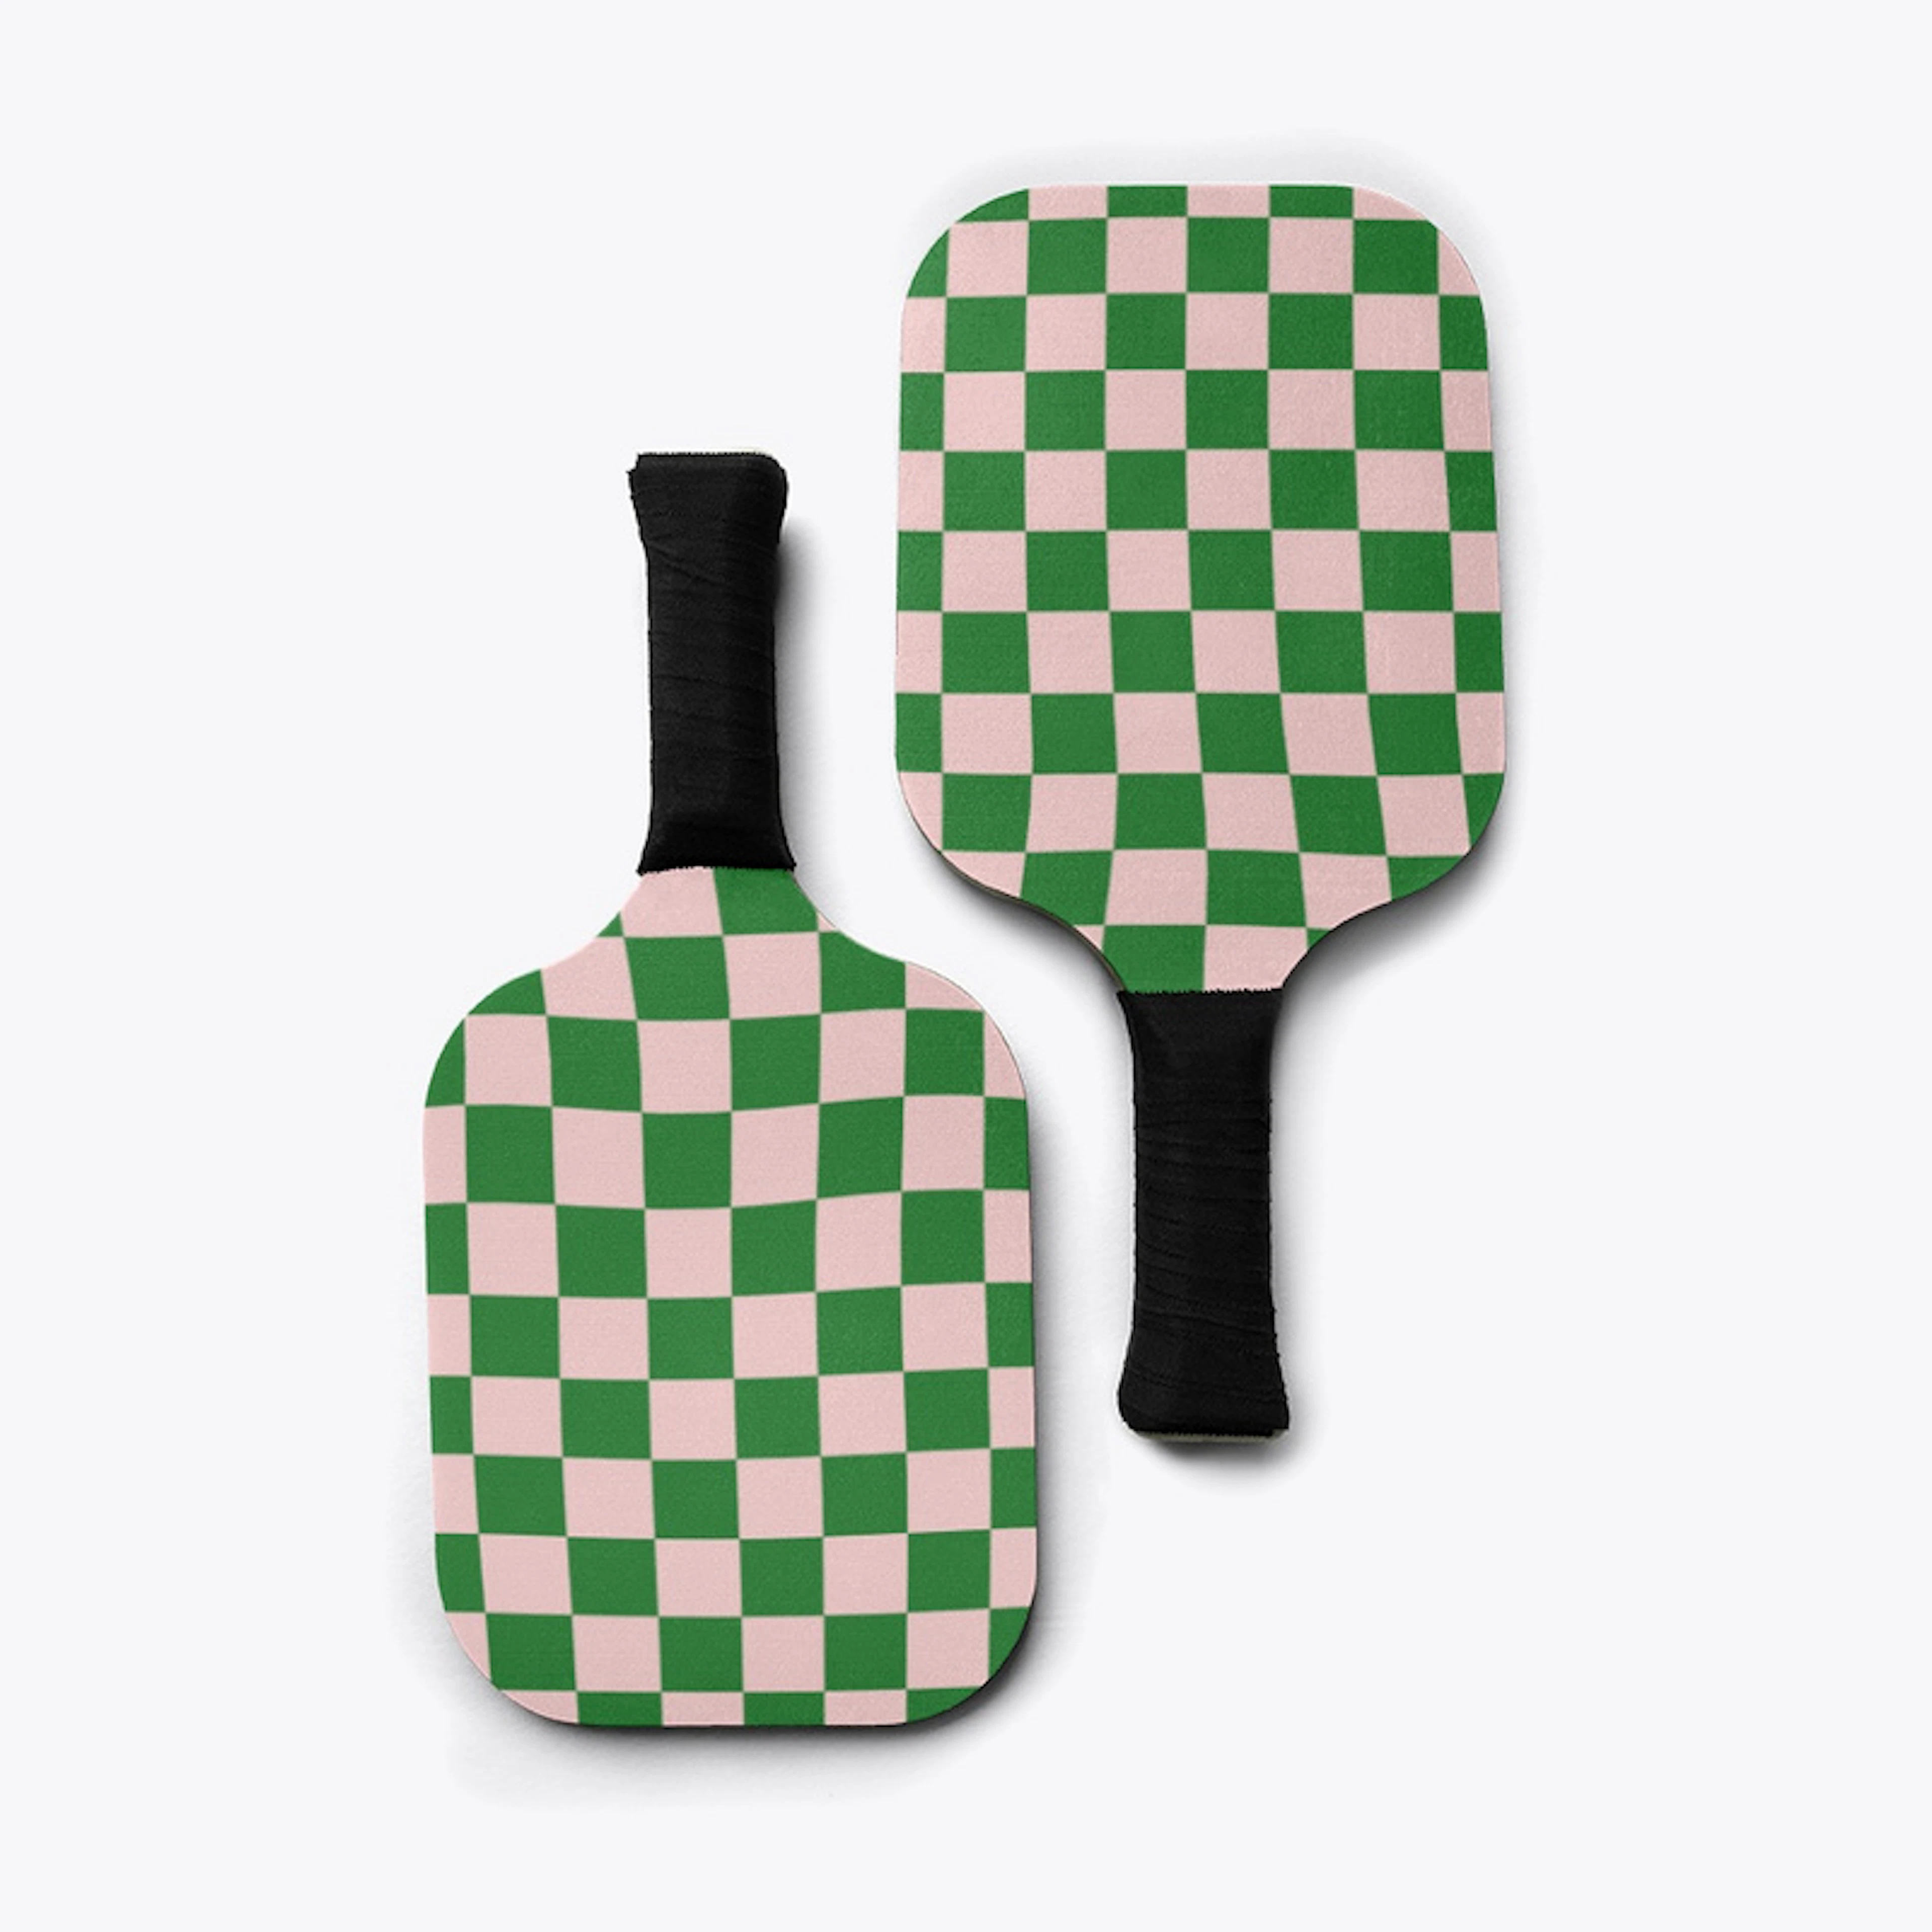 Checker Champ Pickleball Paddles Set